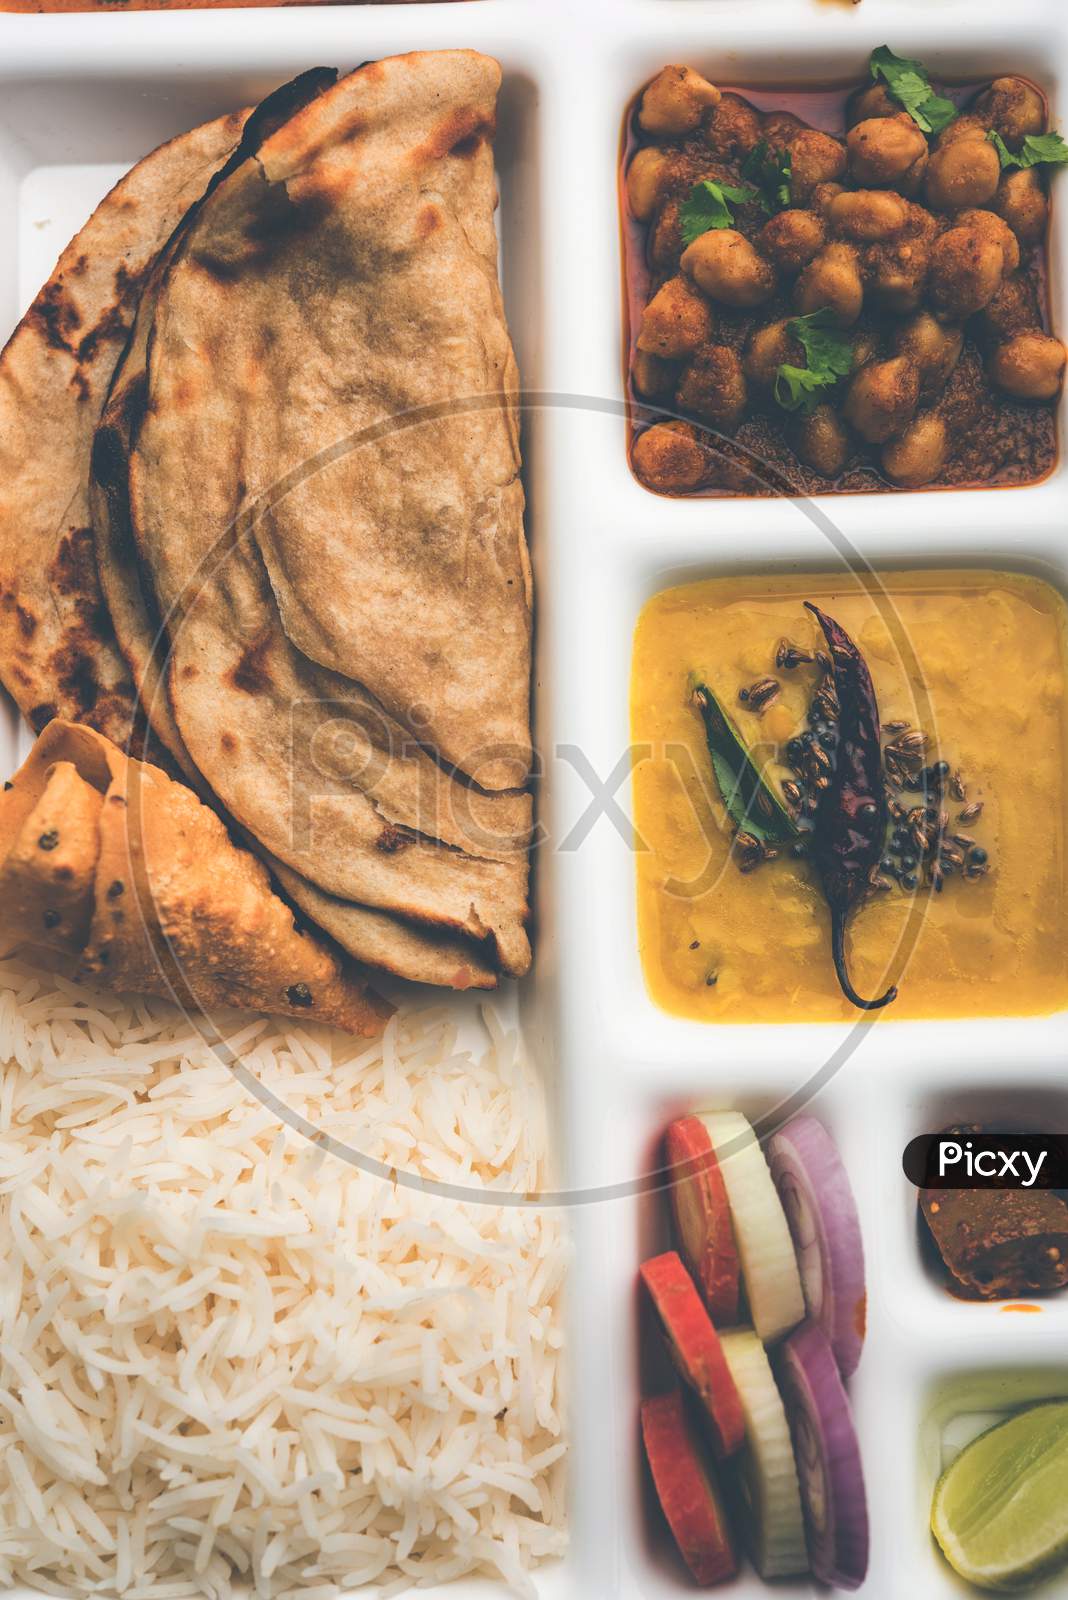 Indian vegetarian Food Thali or Parcel food-tray